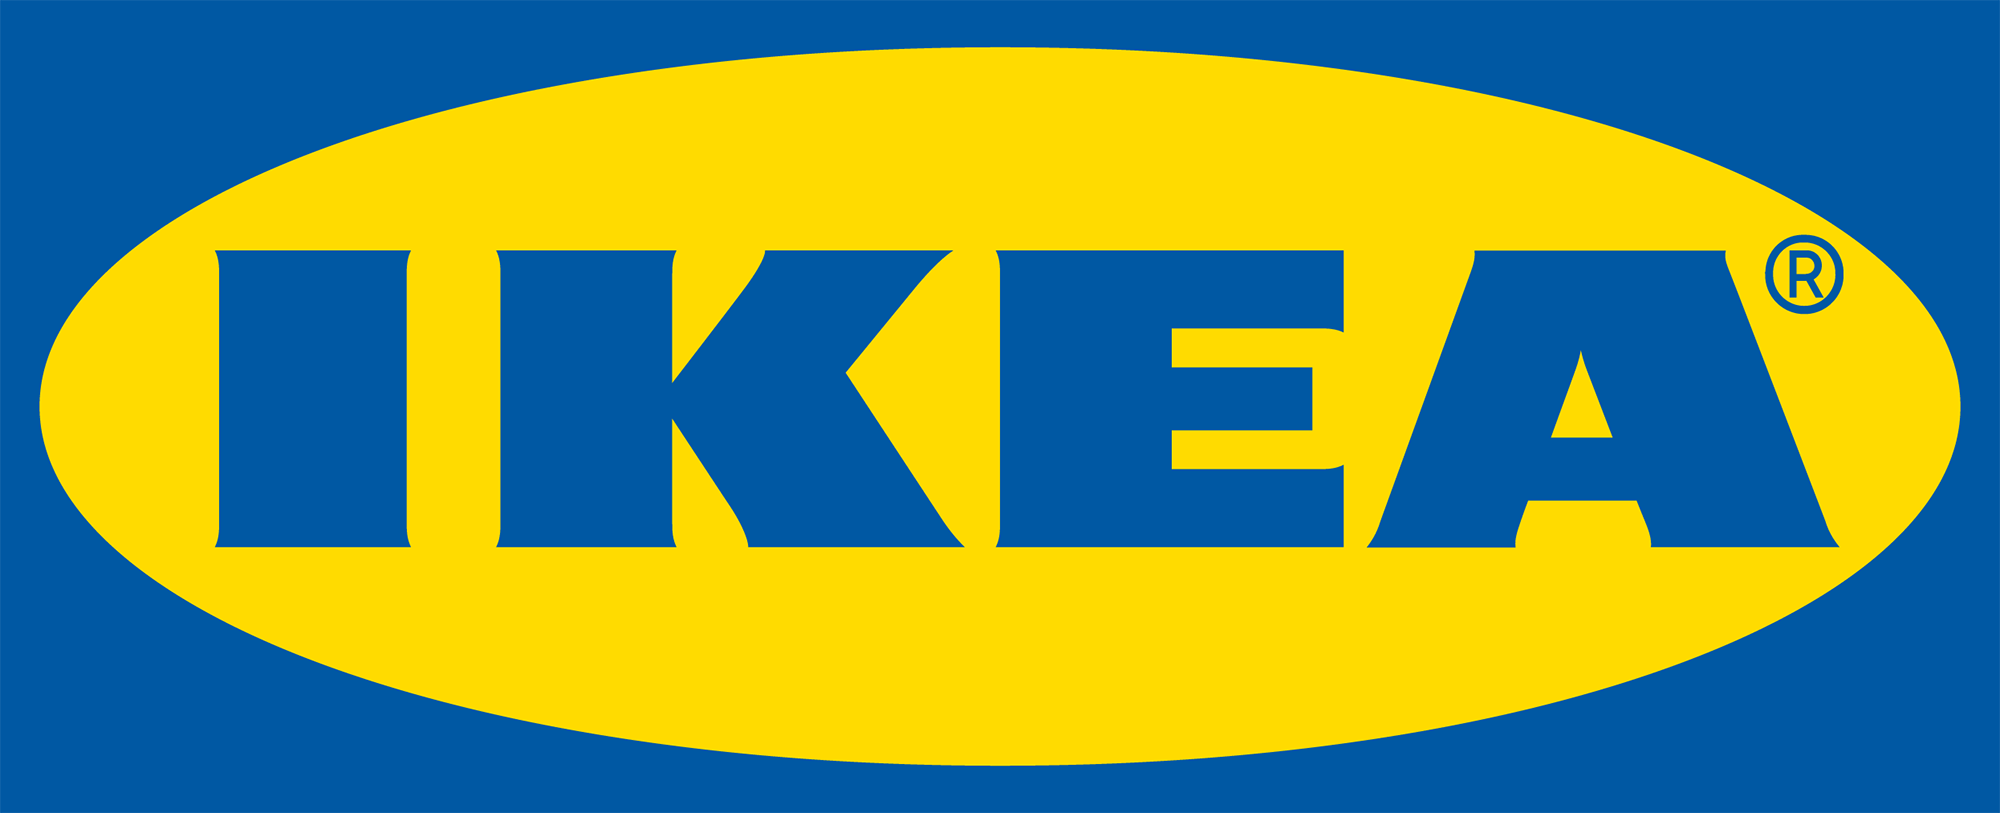 The IKEA logo